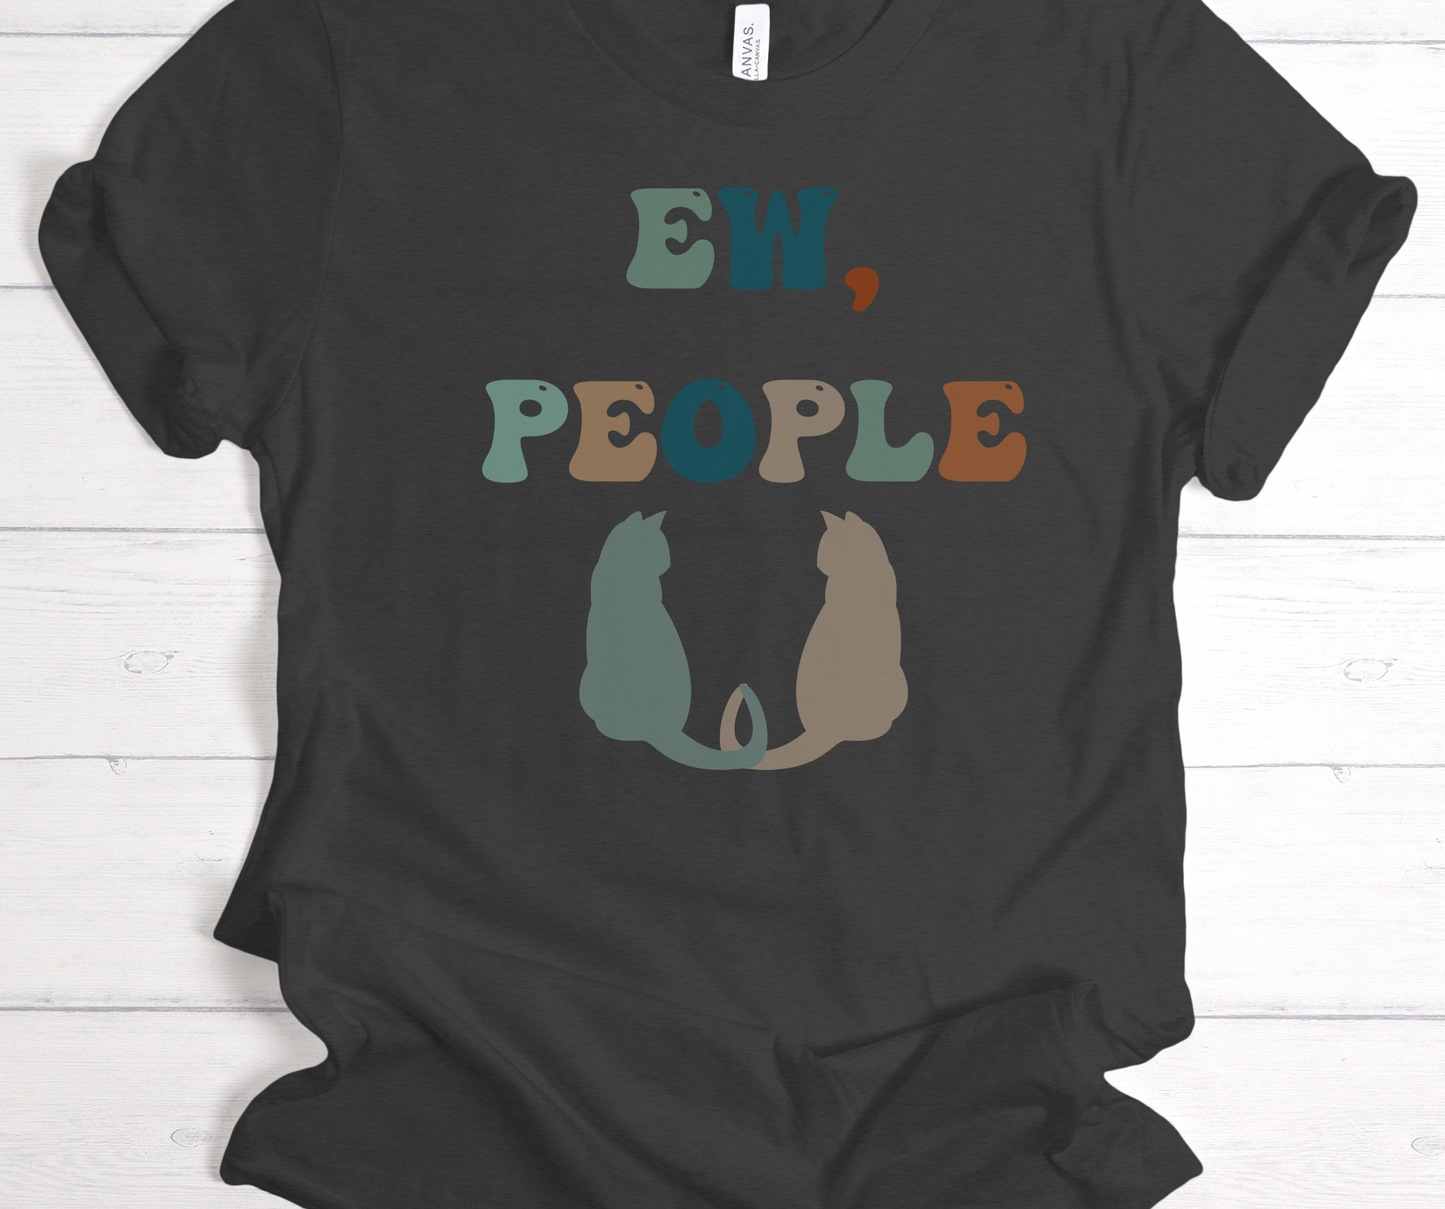 Ew, People Cat Shirt